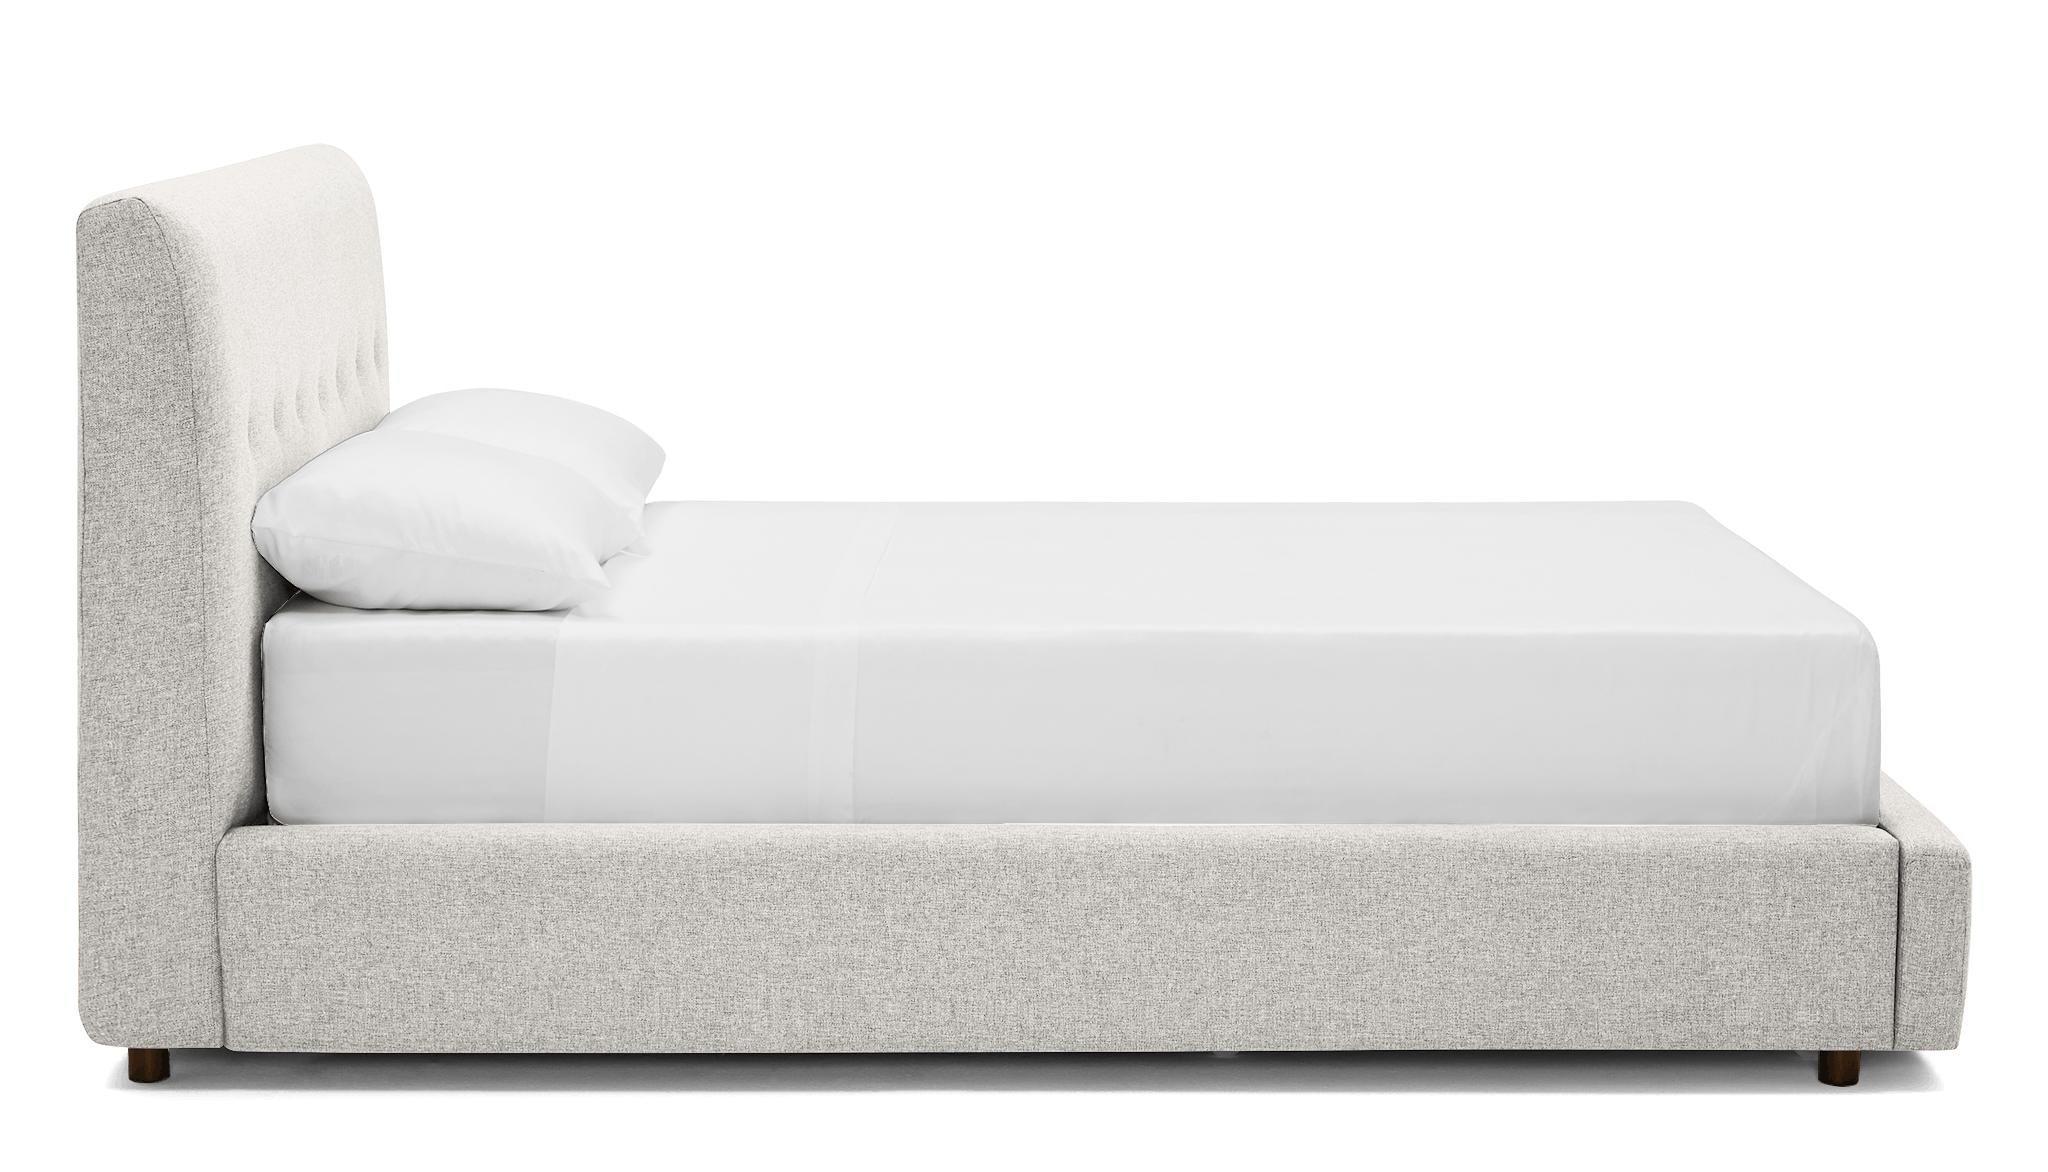 White Alvin Mid Century Modern Storage Bed - Tussah Snow - Mocha - Queen - Image 2